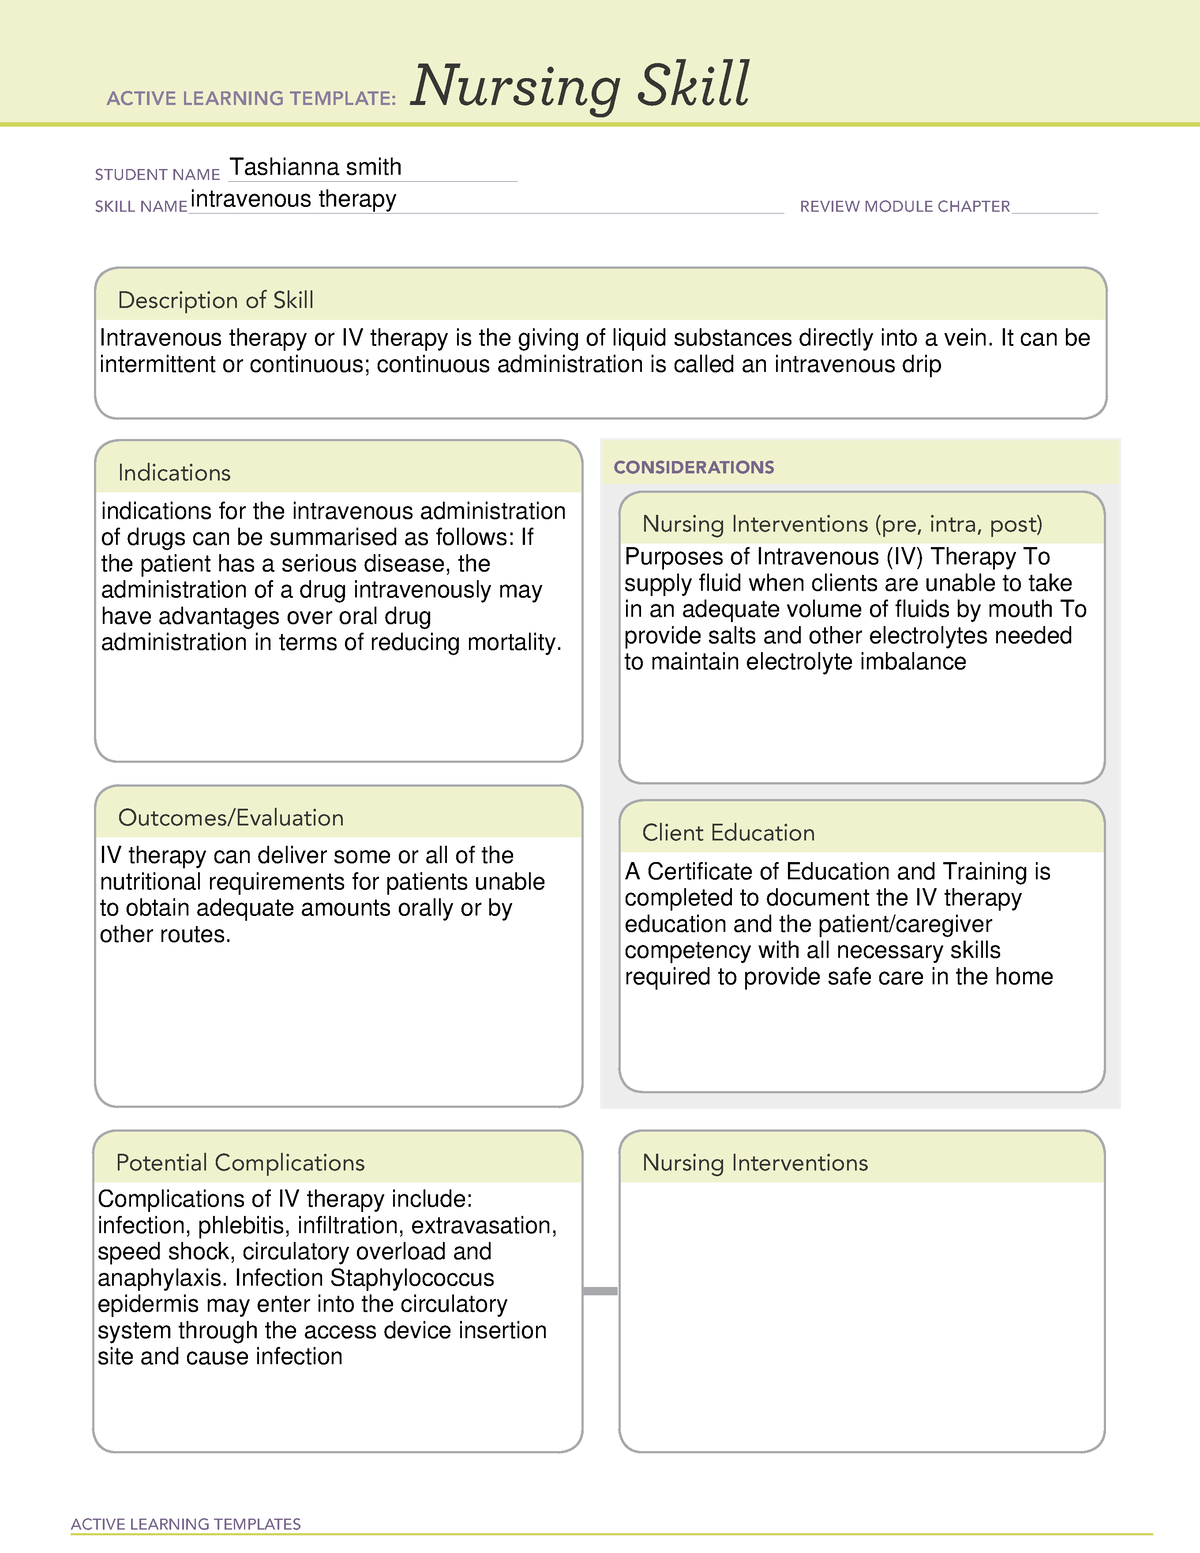 nursing-skill-template-5-active-learning-templates-nursing-skill-student-name-studocu